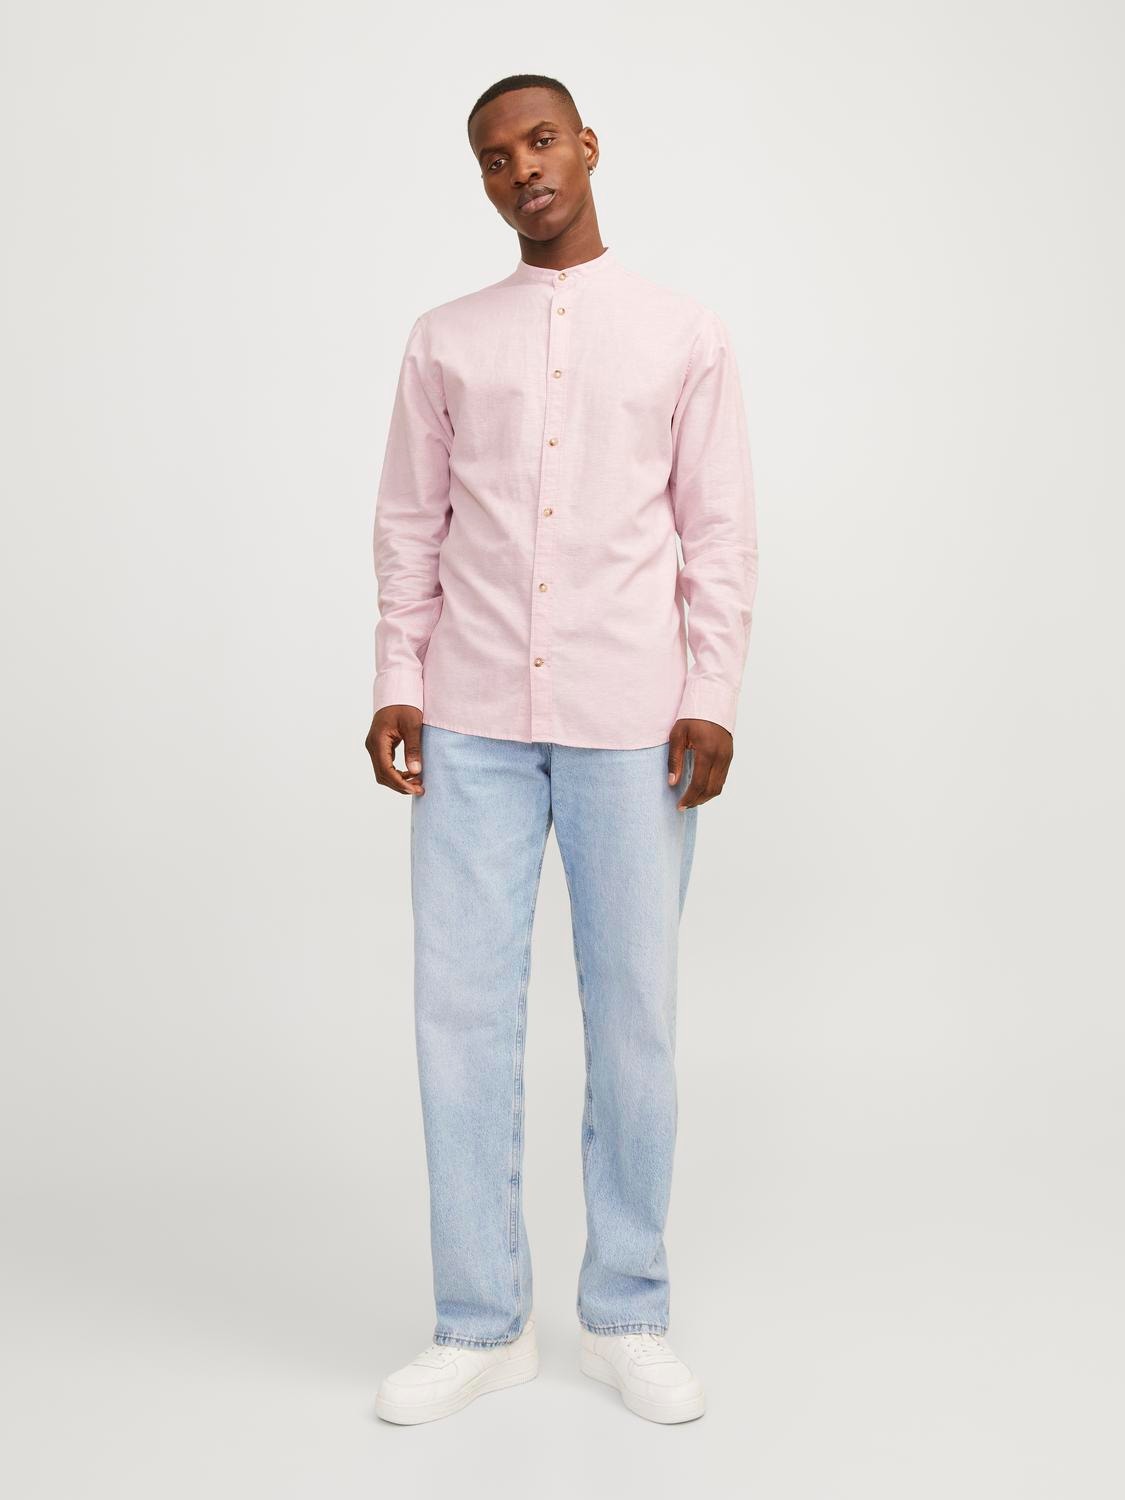 Jack & Jones Camisa Comfort Fit -Pink Nectar - 12248385